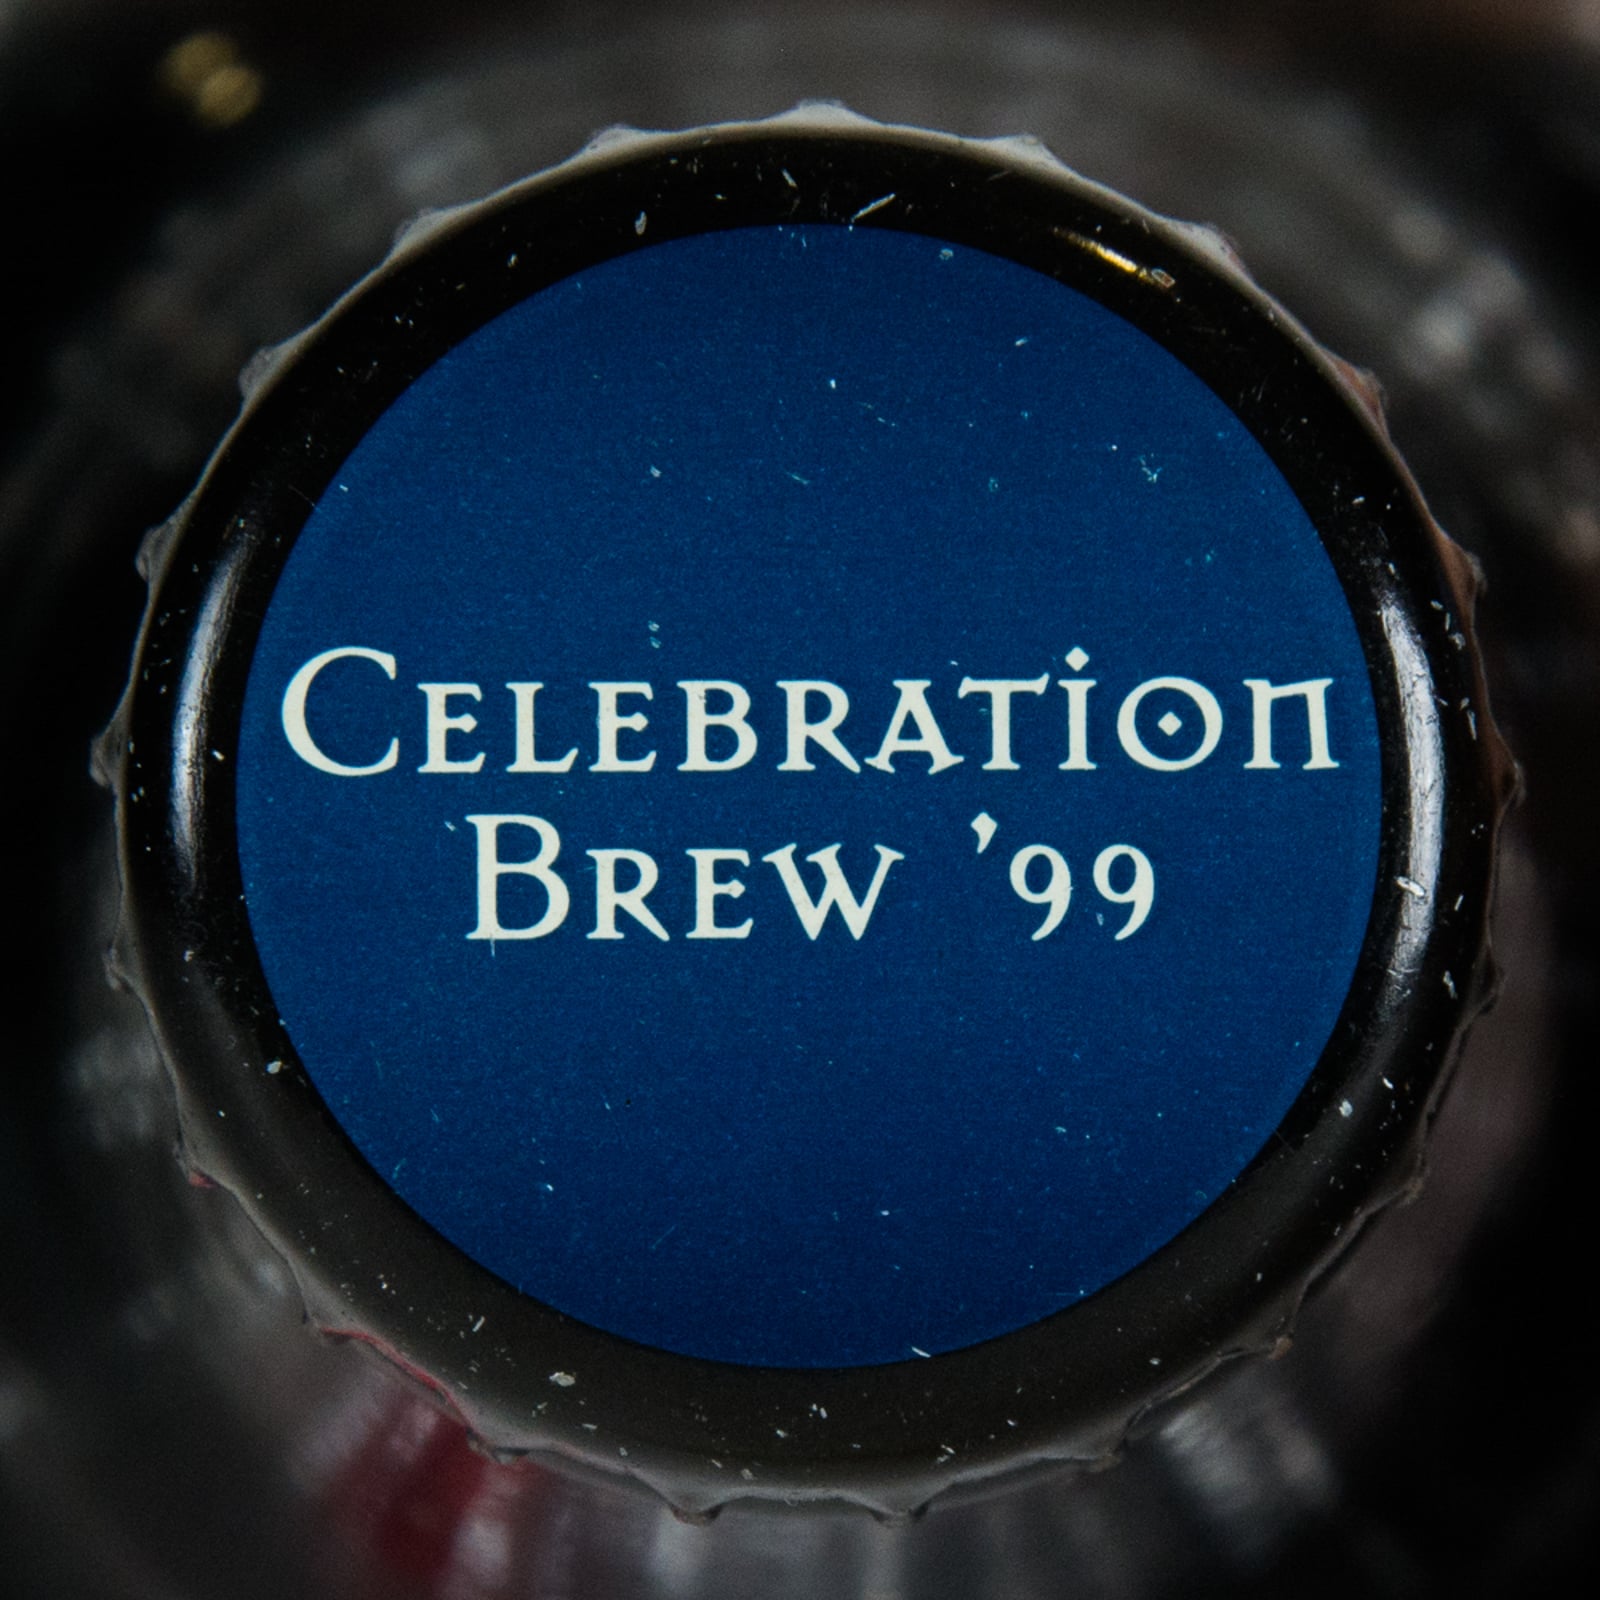 Millennium "Celebration Brew '99" Commemorative Beer Bottle, 330 ml